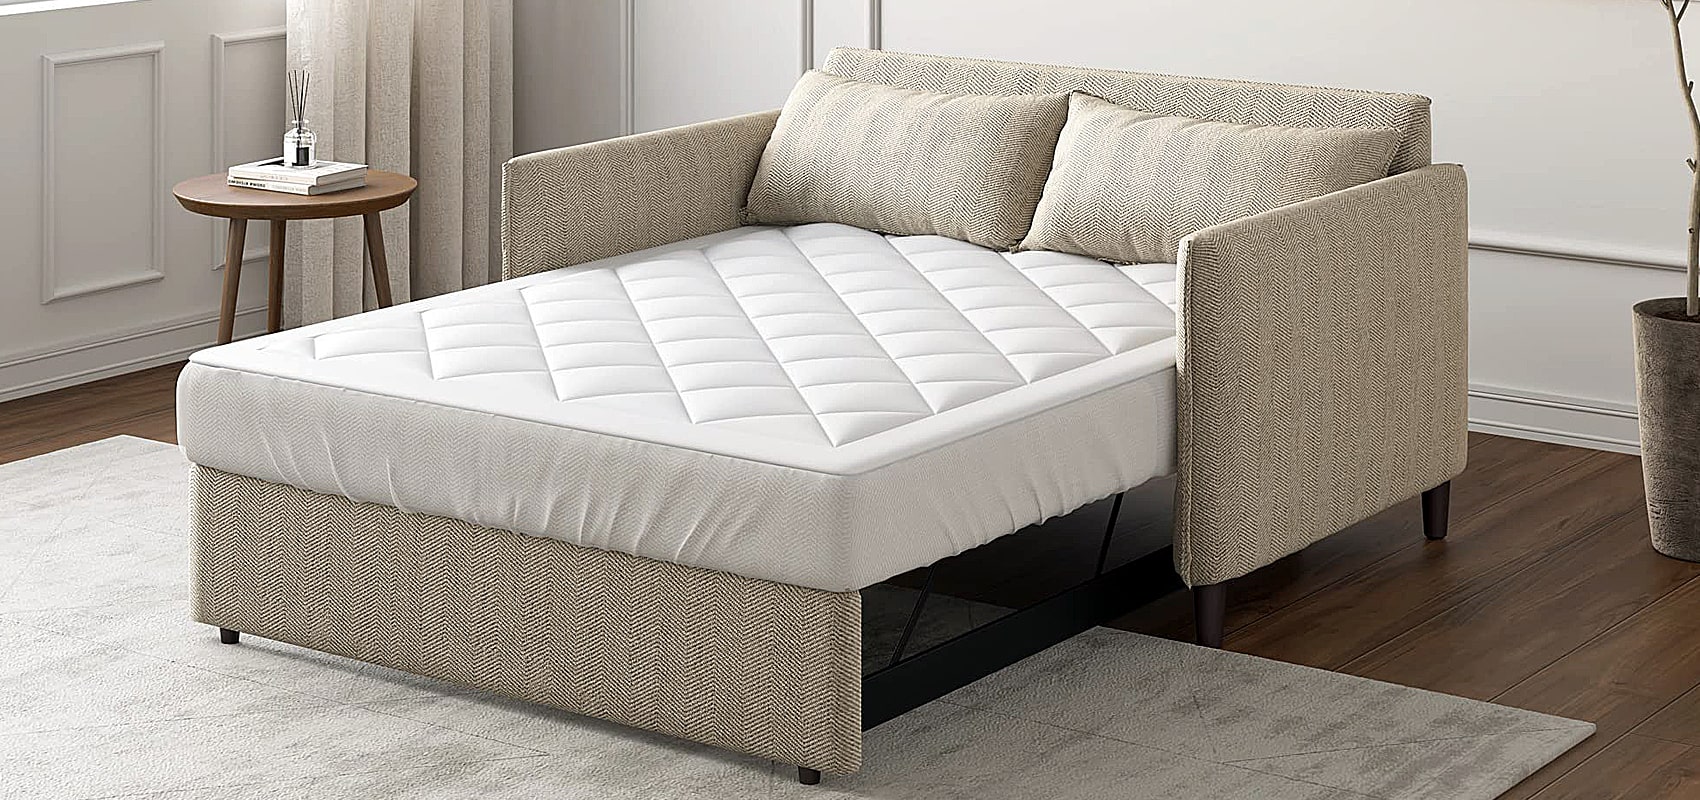 White Sofa Bed | White Sofa Sleeper | White Couch Sleeper | White Couch Bed